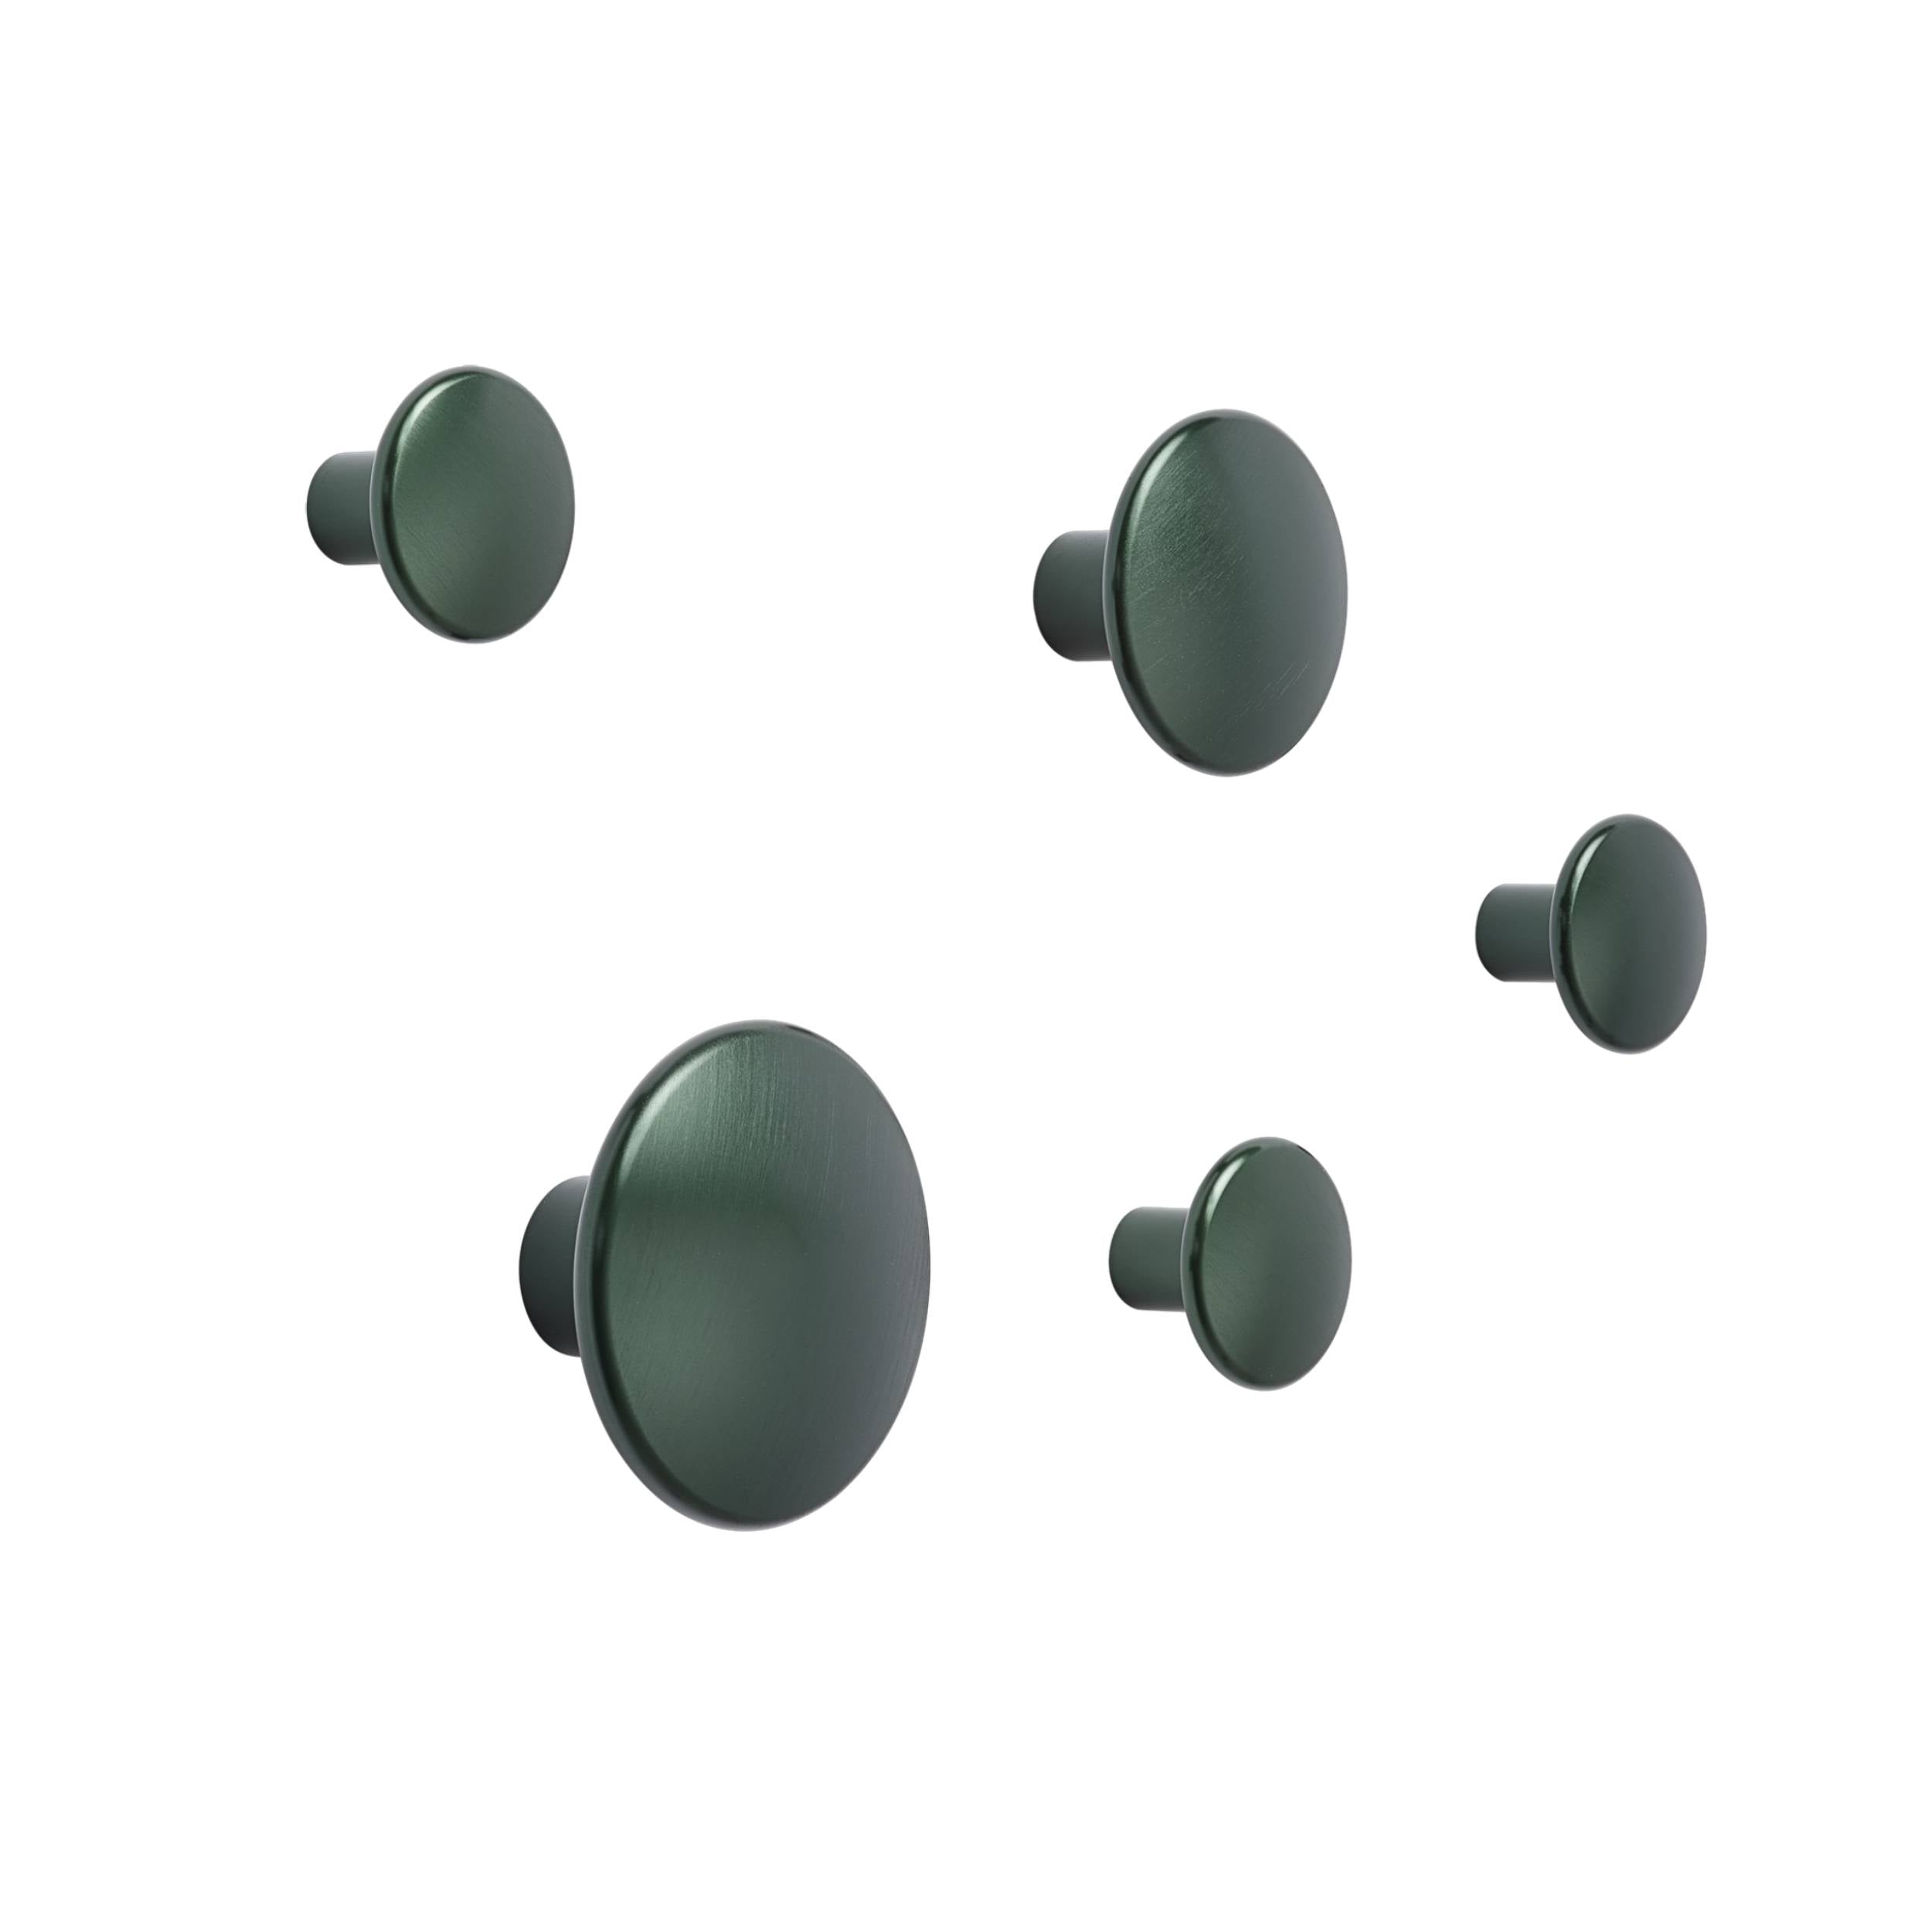 The Dots Metal Coat Hooks: Mixed Set of 5 + Dark Green